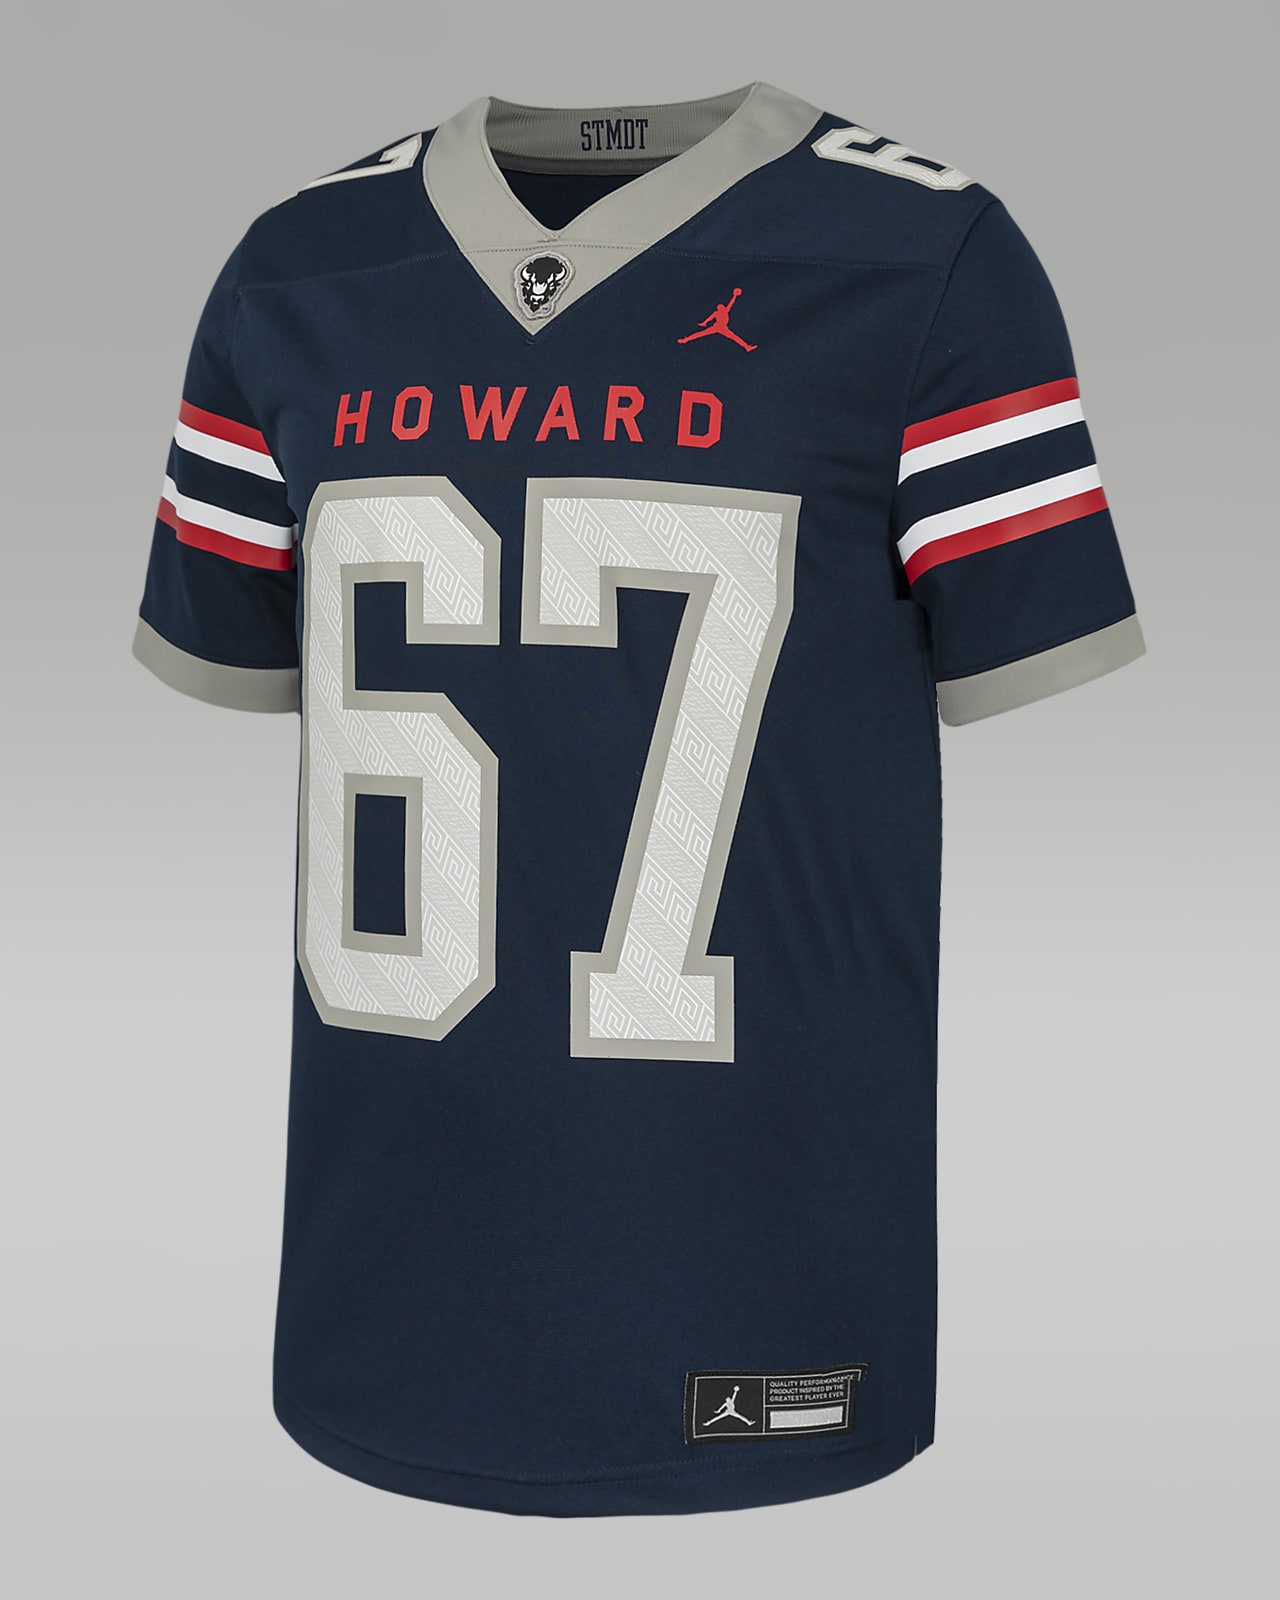 Howard 2023 Men's Nike College Football Jersey